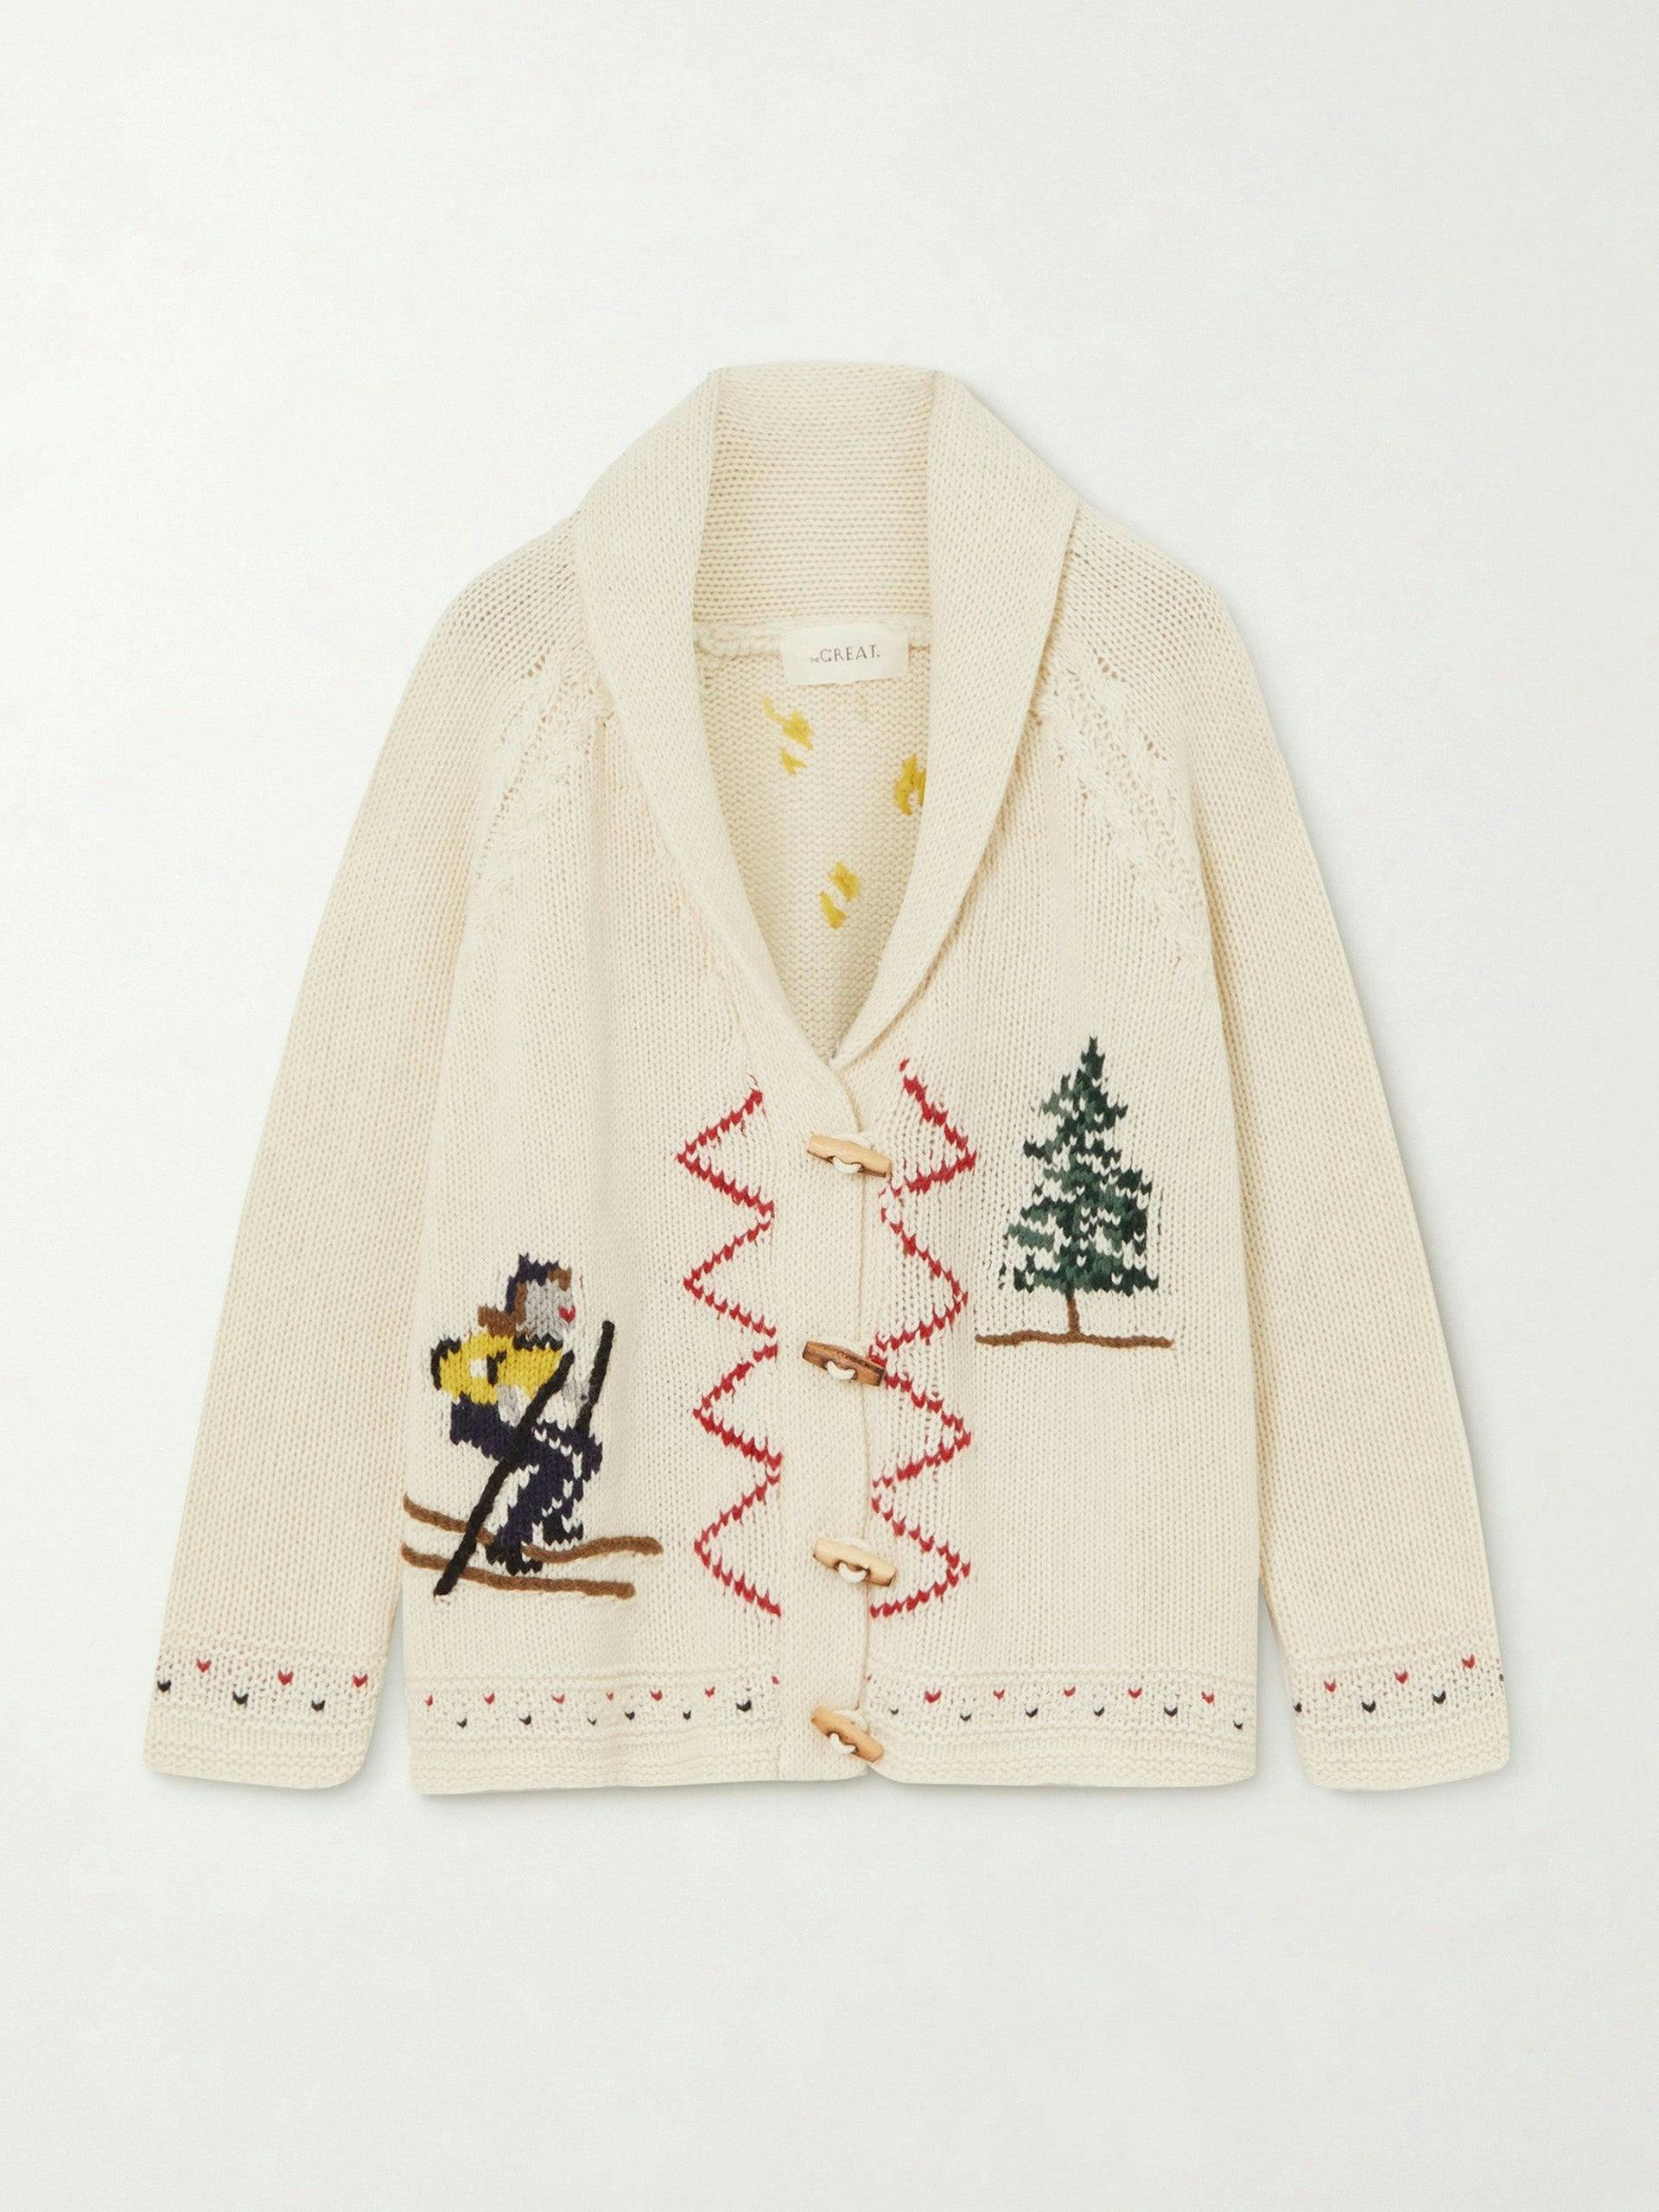 The Ski Lodge embroidered cardigan